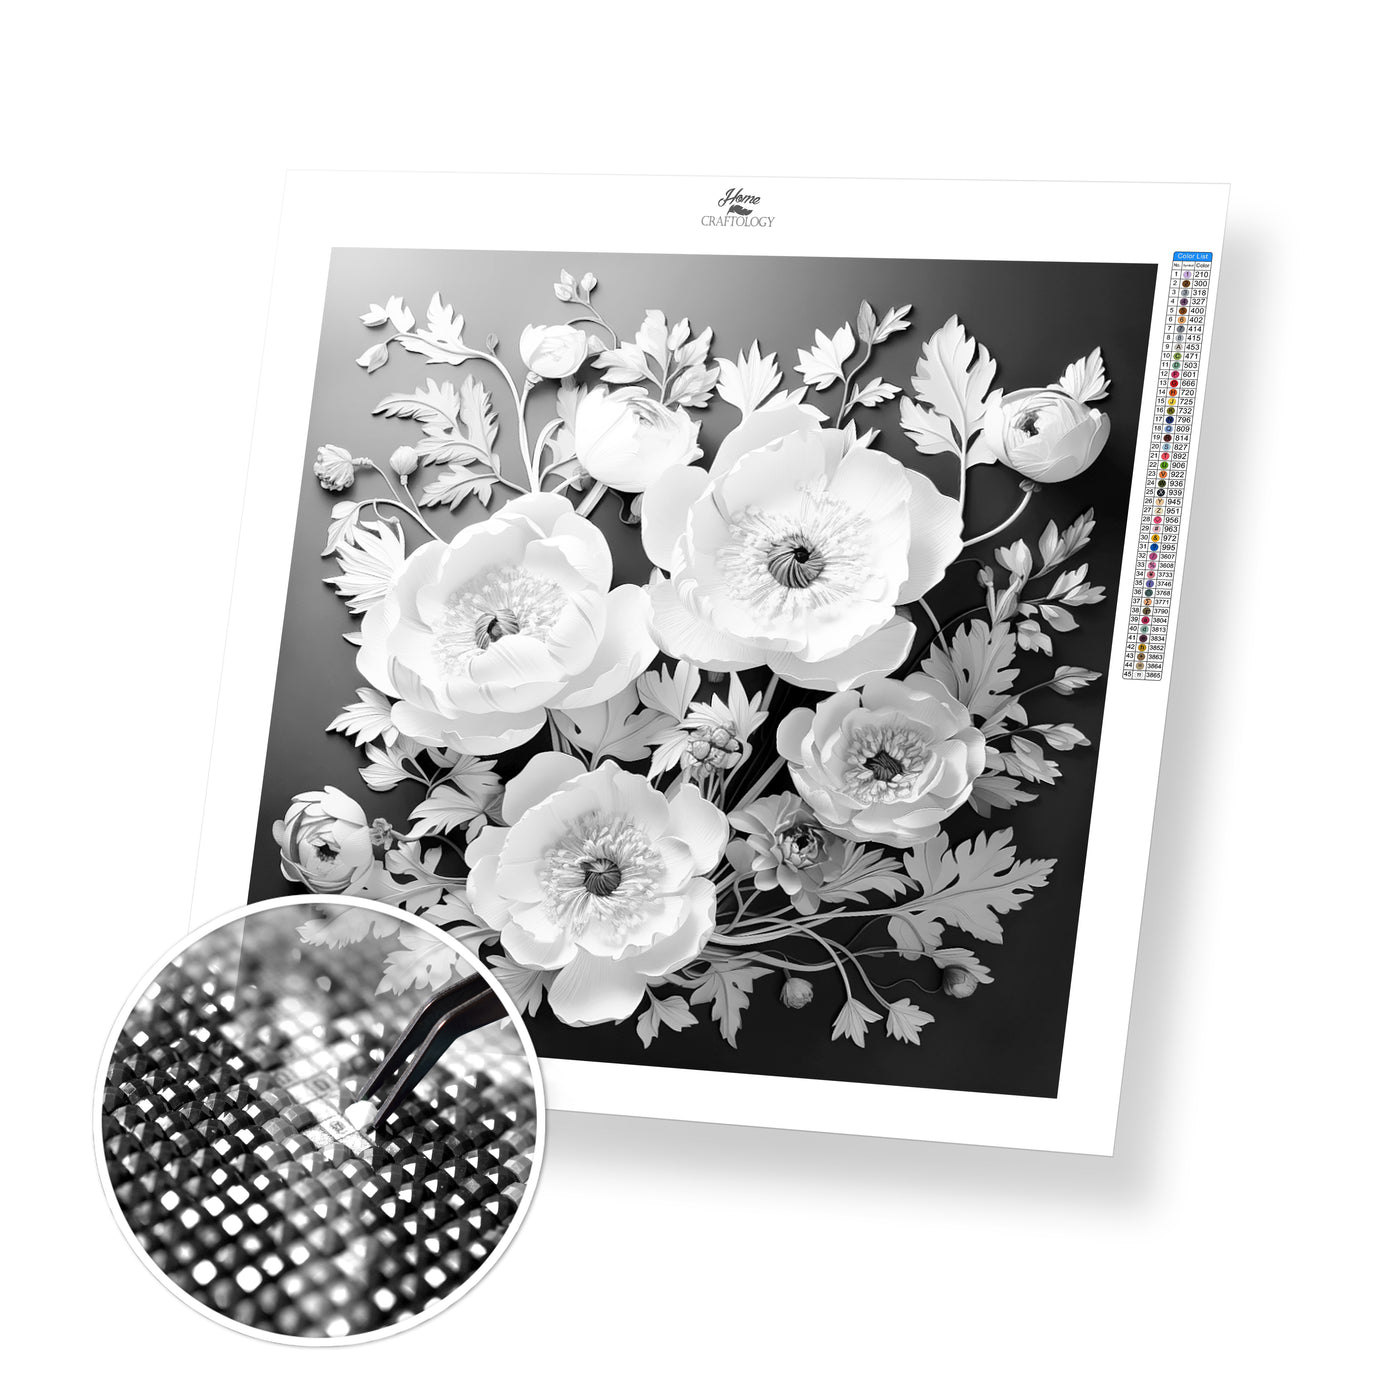 New! White Flowers - Premium Diamond Painting Kit